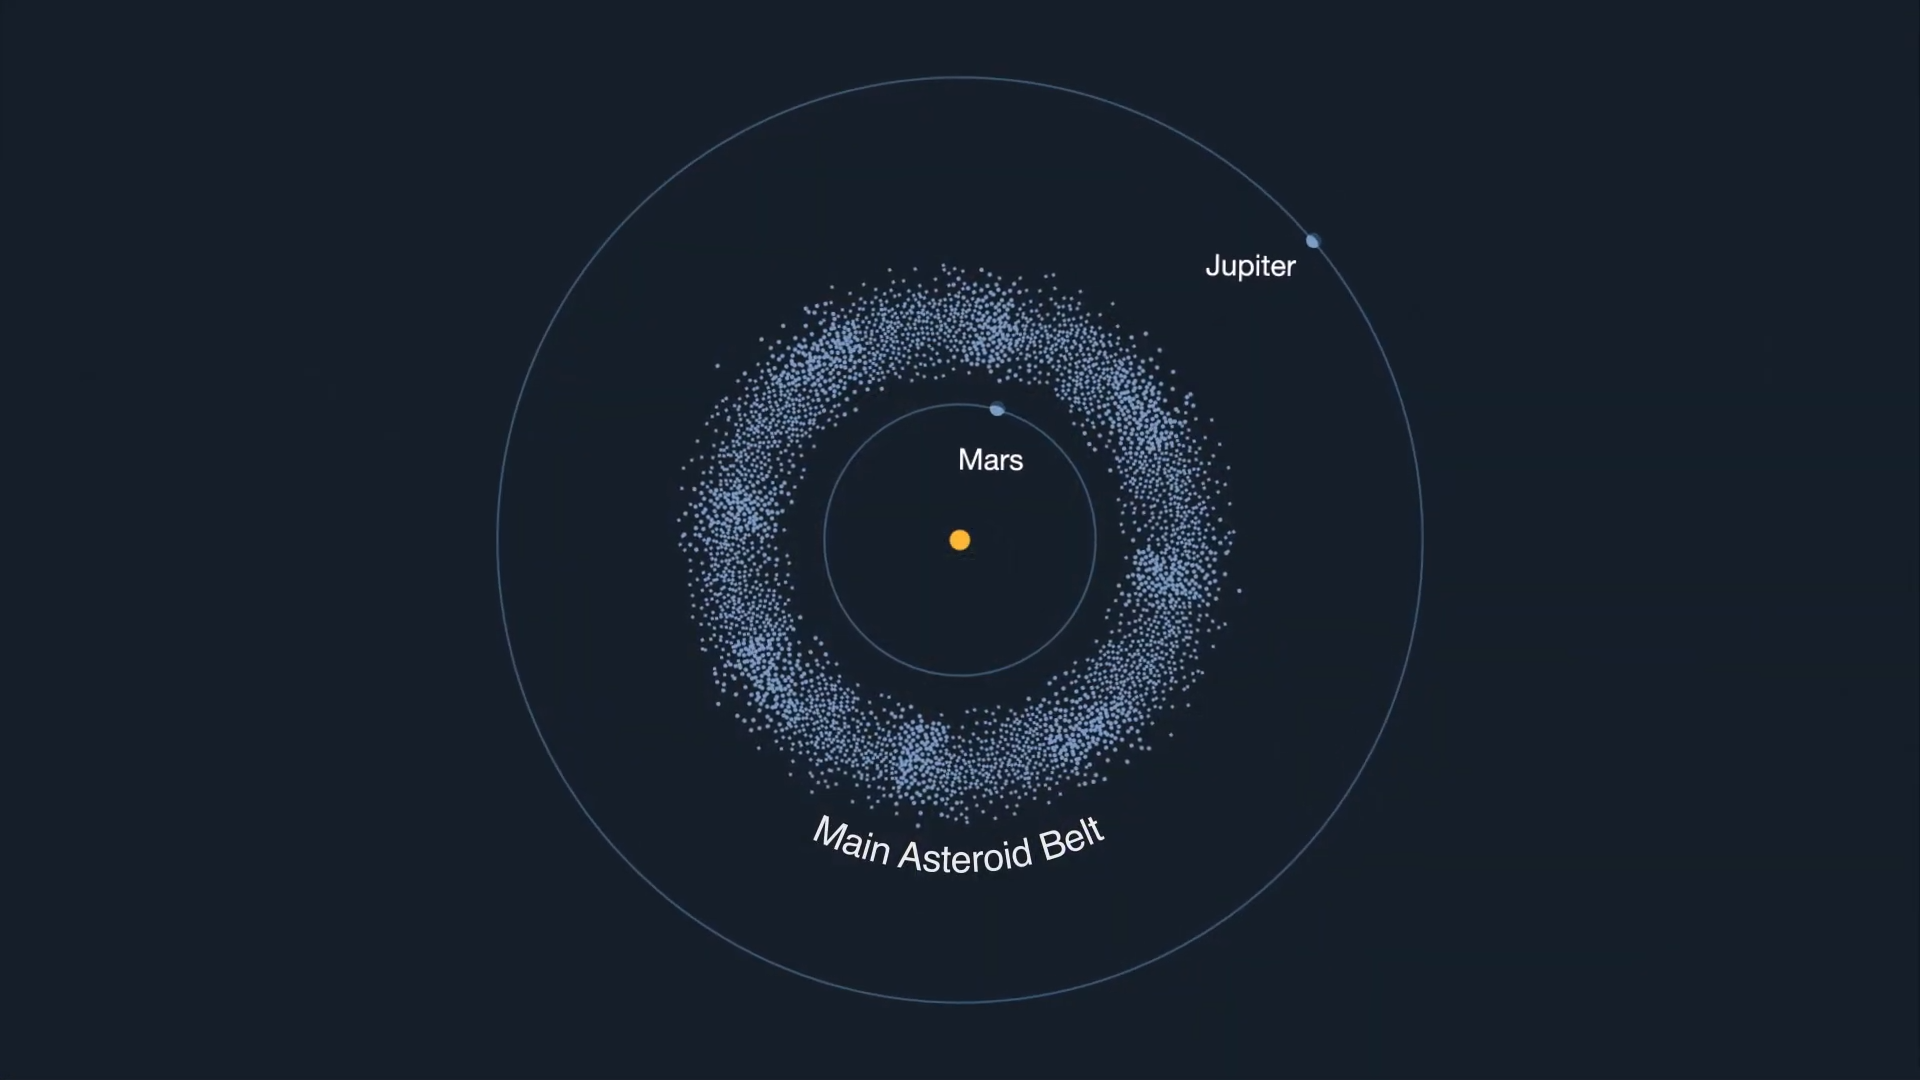 Diagram showing main asteroid belt between Mars and Jupiter.